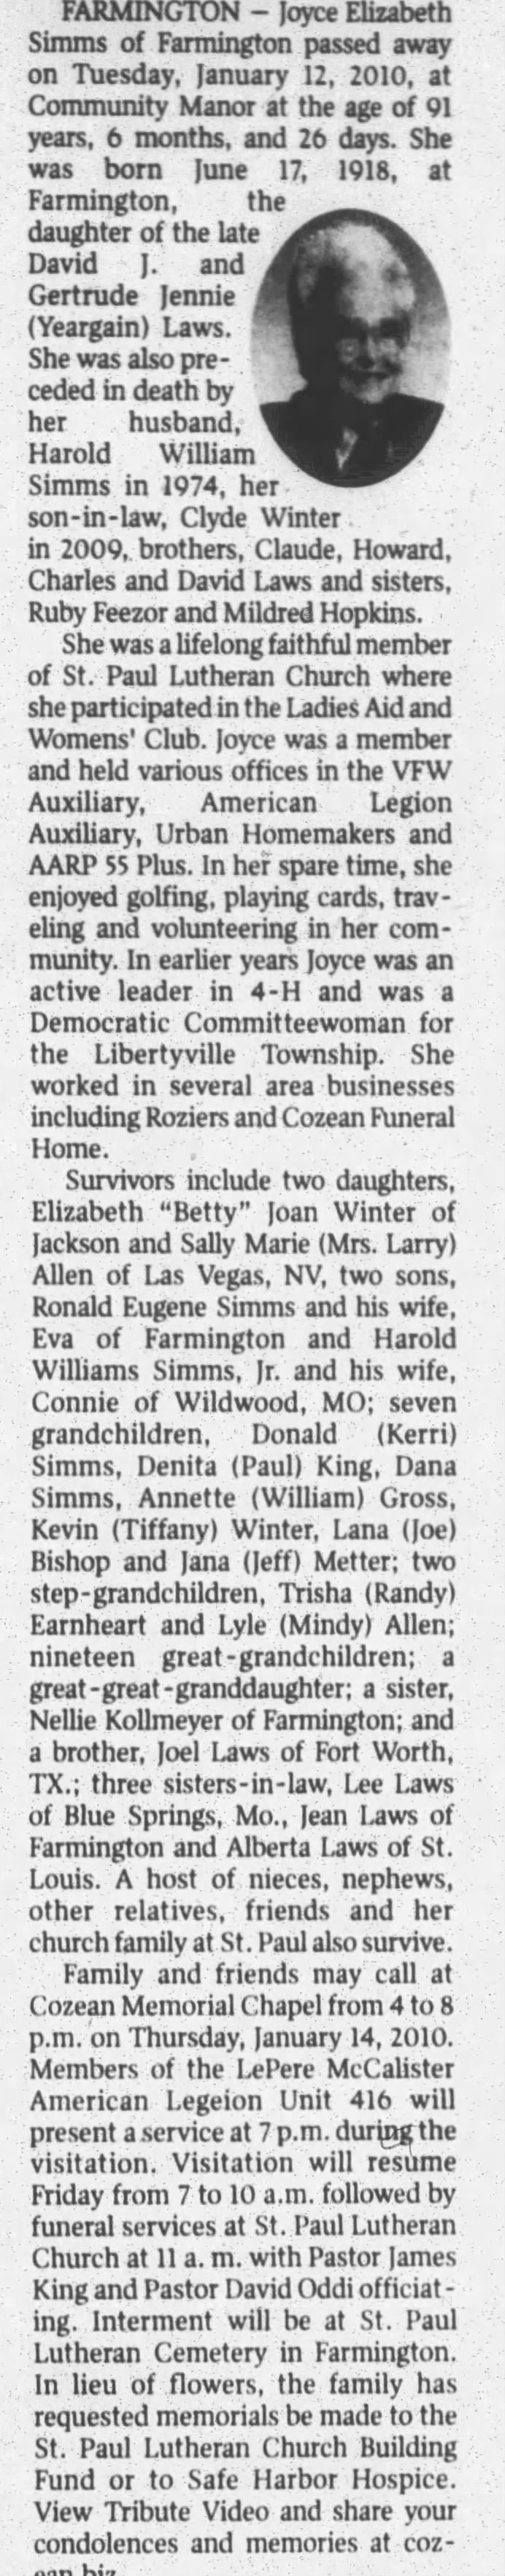 Obituary for Joyce Elizabeth Simms